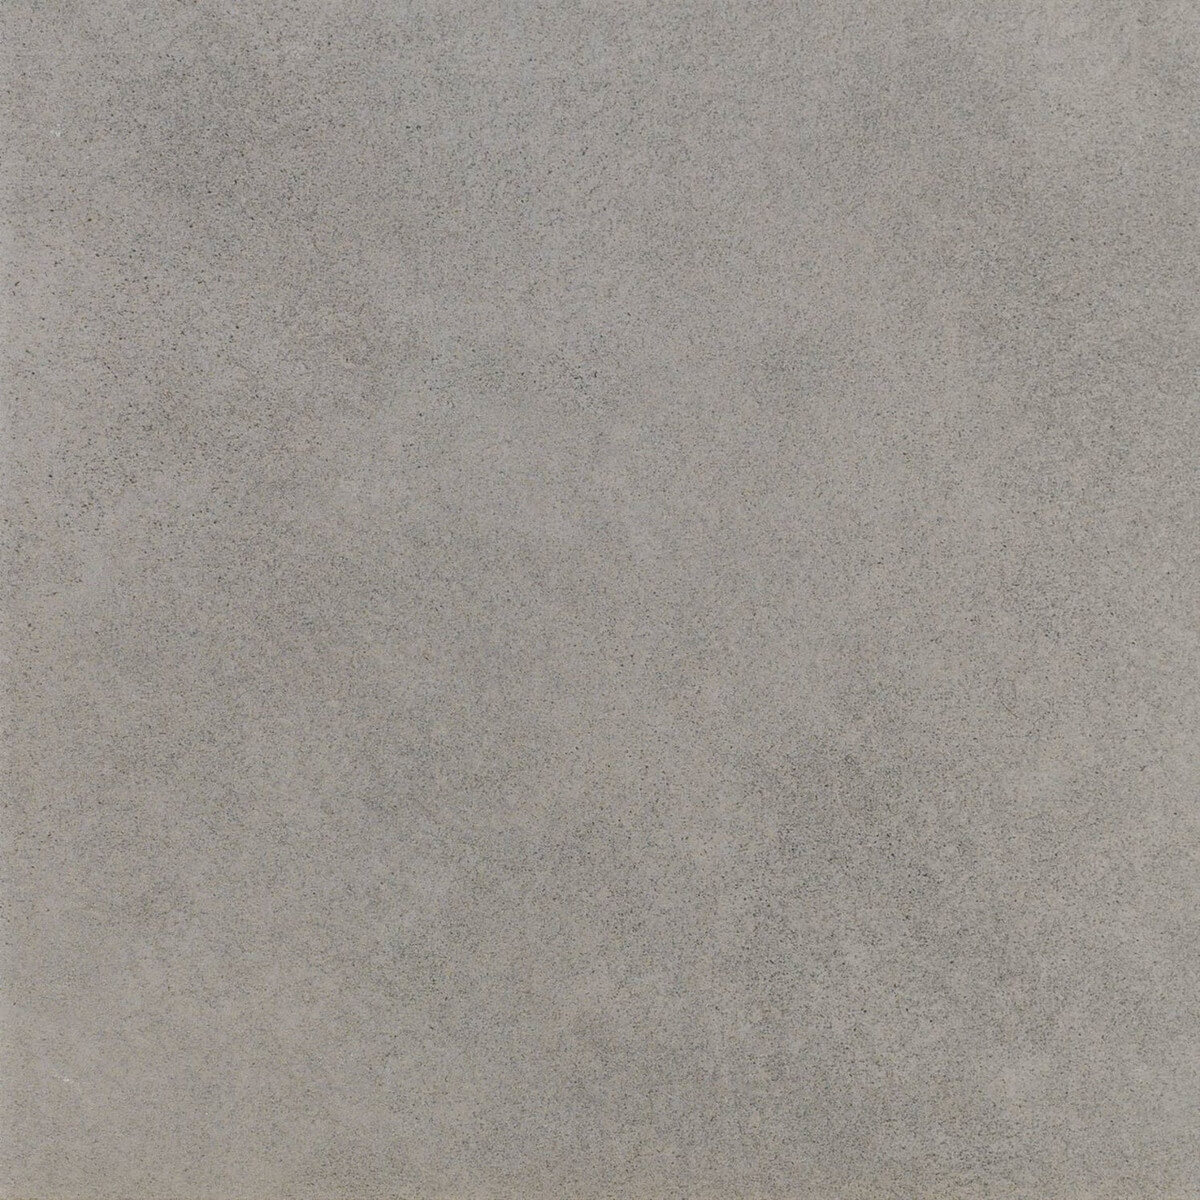 DOVER - Carrelage Sol Antidérapant Effet béton - Grey 33x33 - Réf.181117